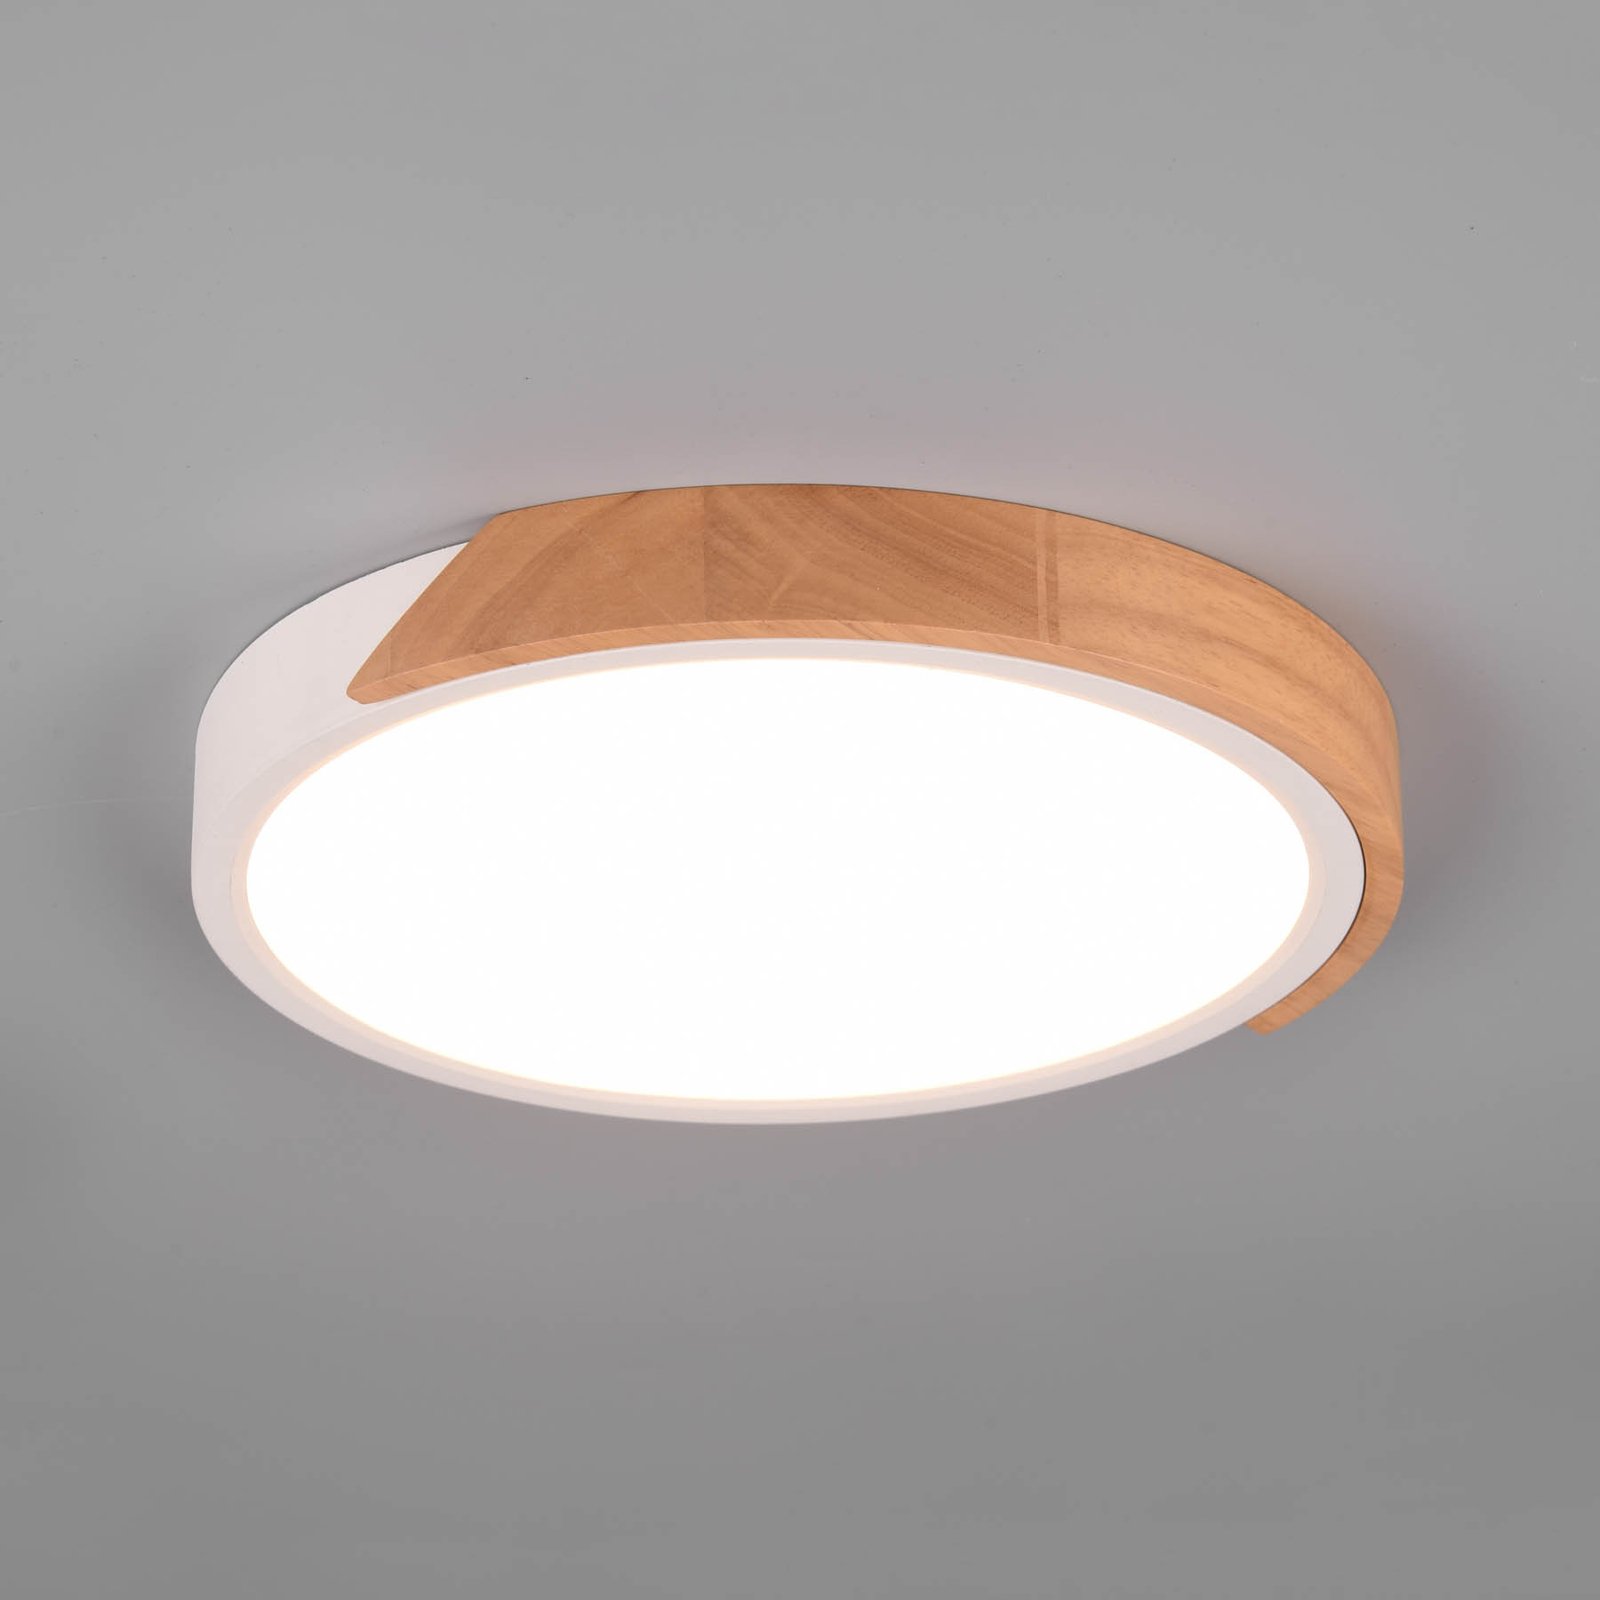 LED-taklampe Jano, Ø 31,5 cm, 3 000 K, hvit